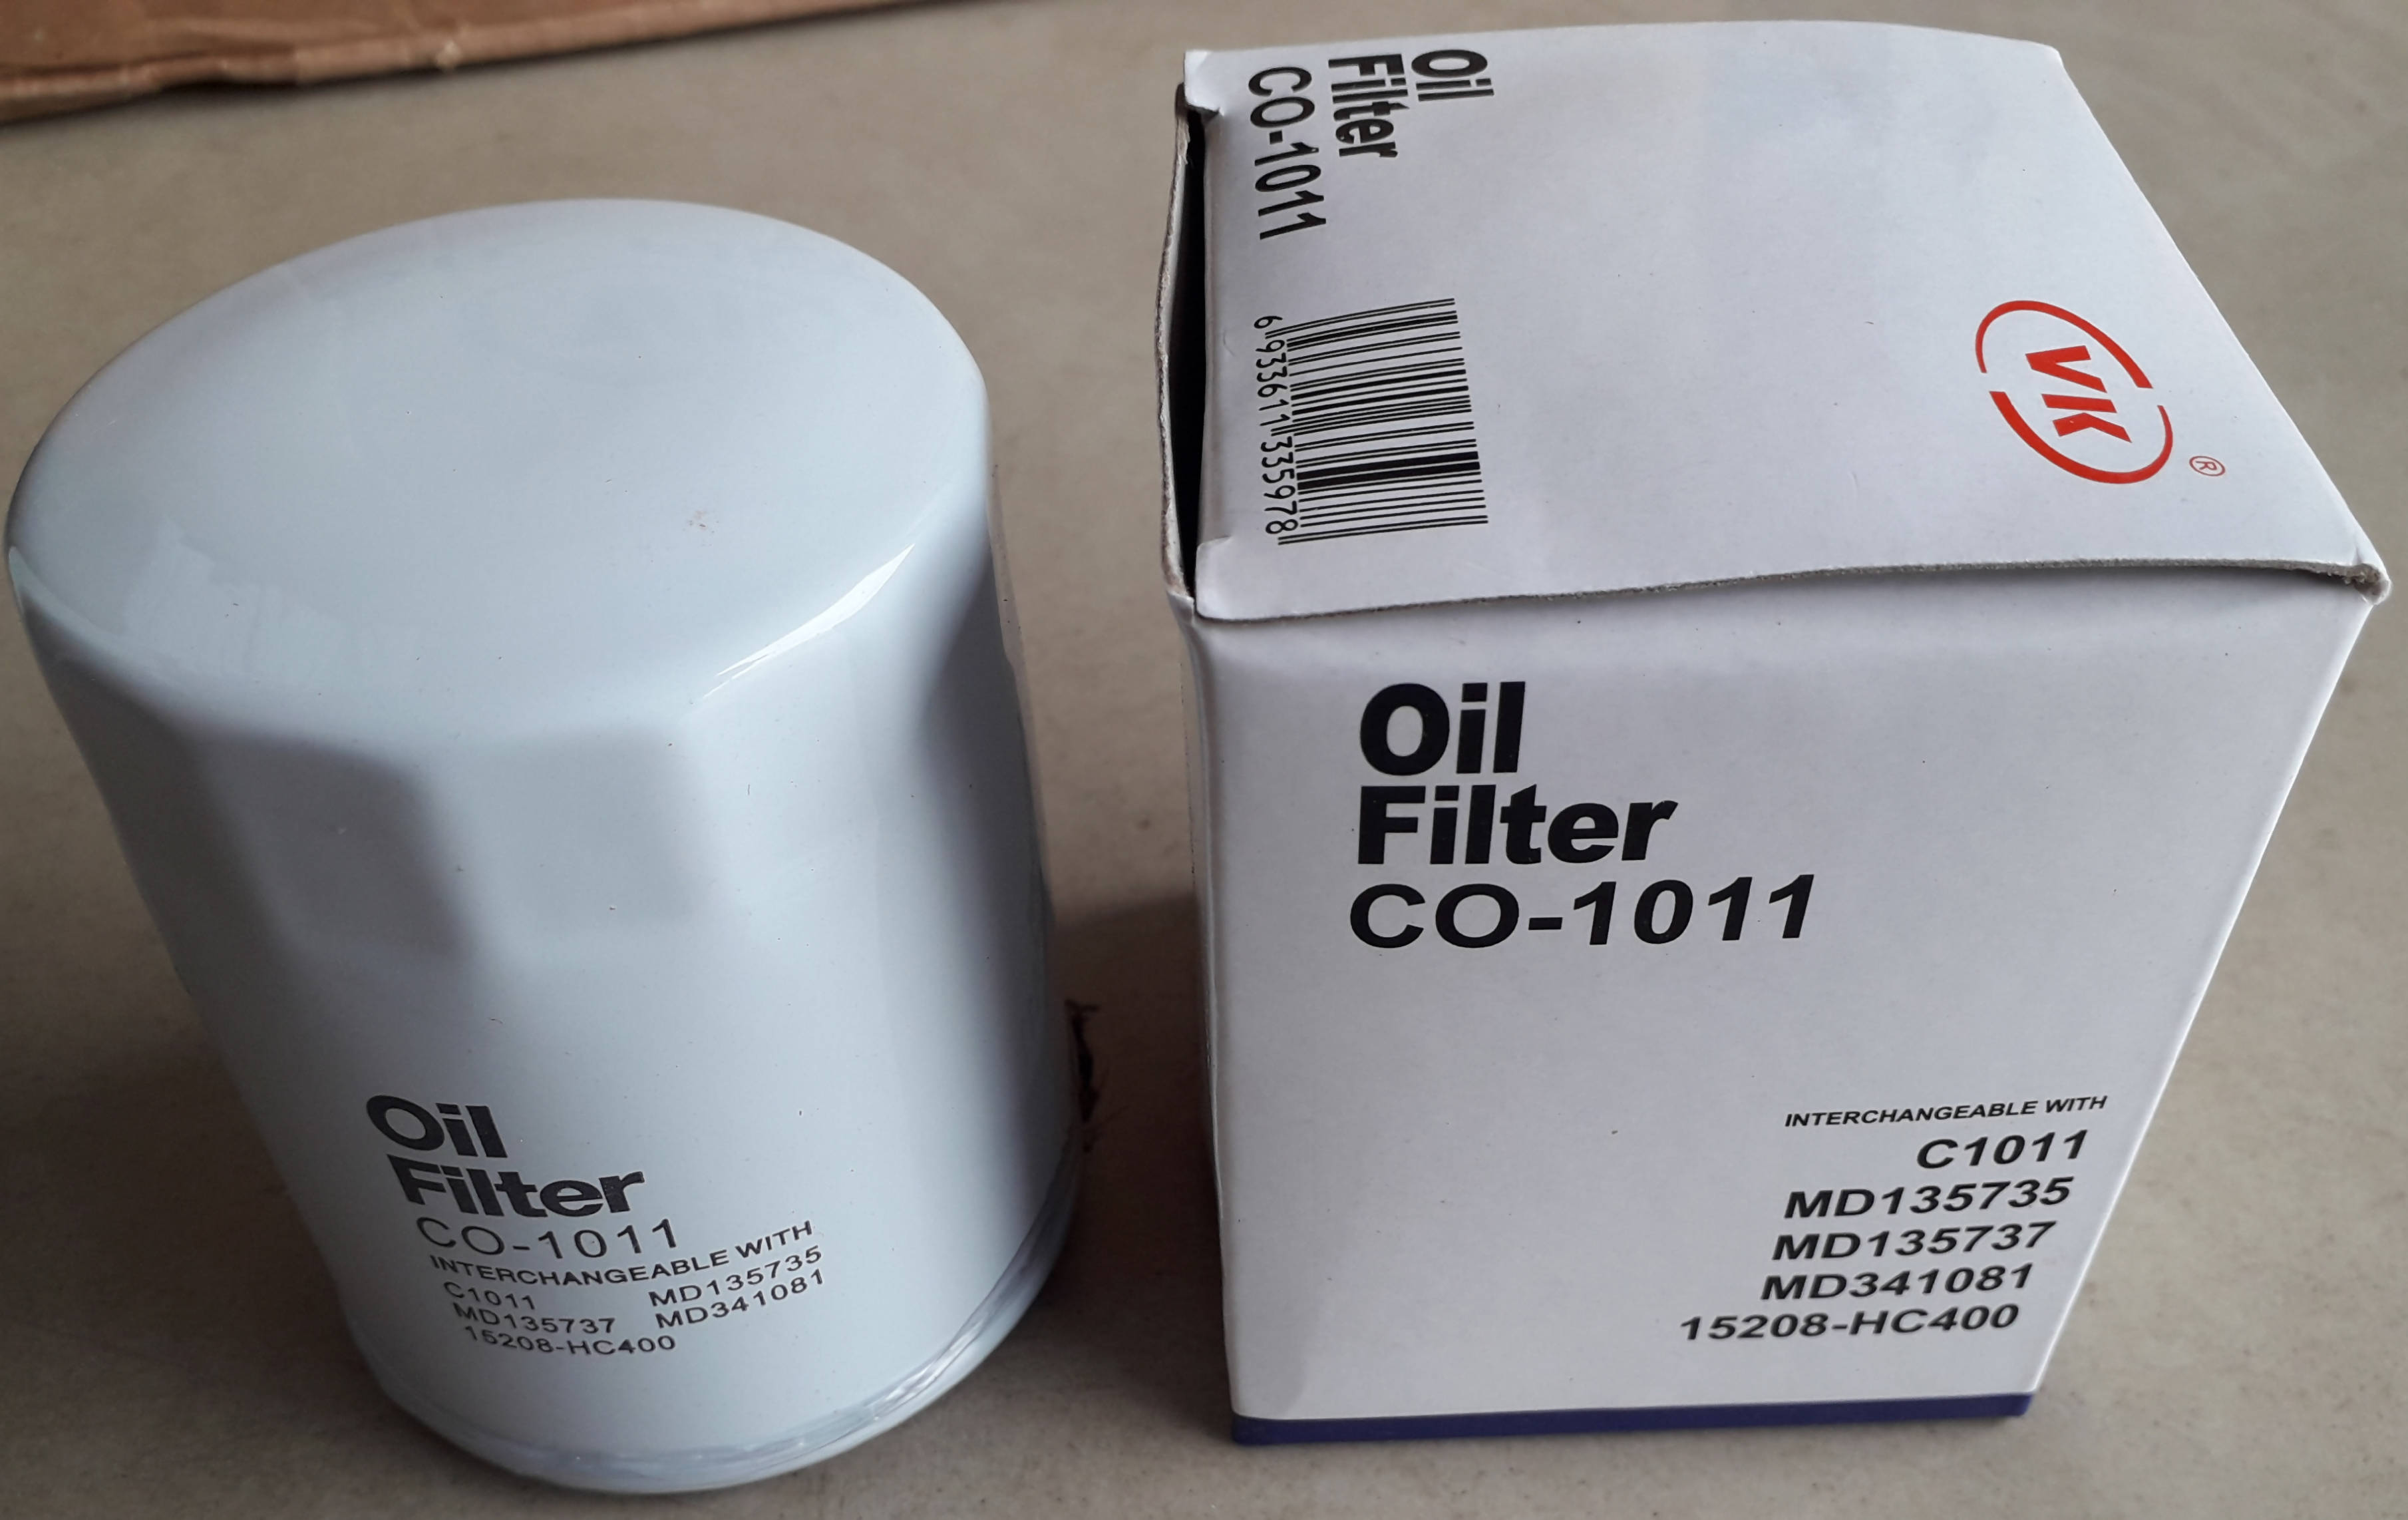 Oil filter, VK, Mitsubishi RVR, C1011, CO-1011 (028673)